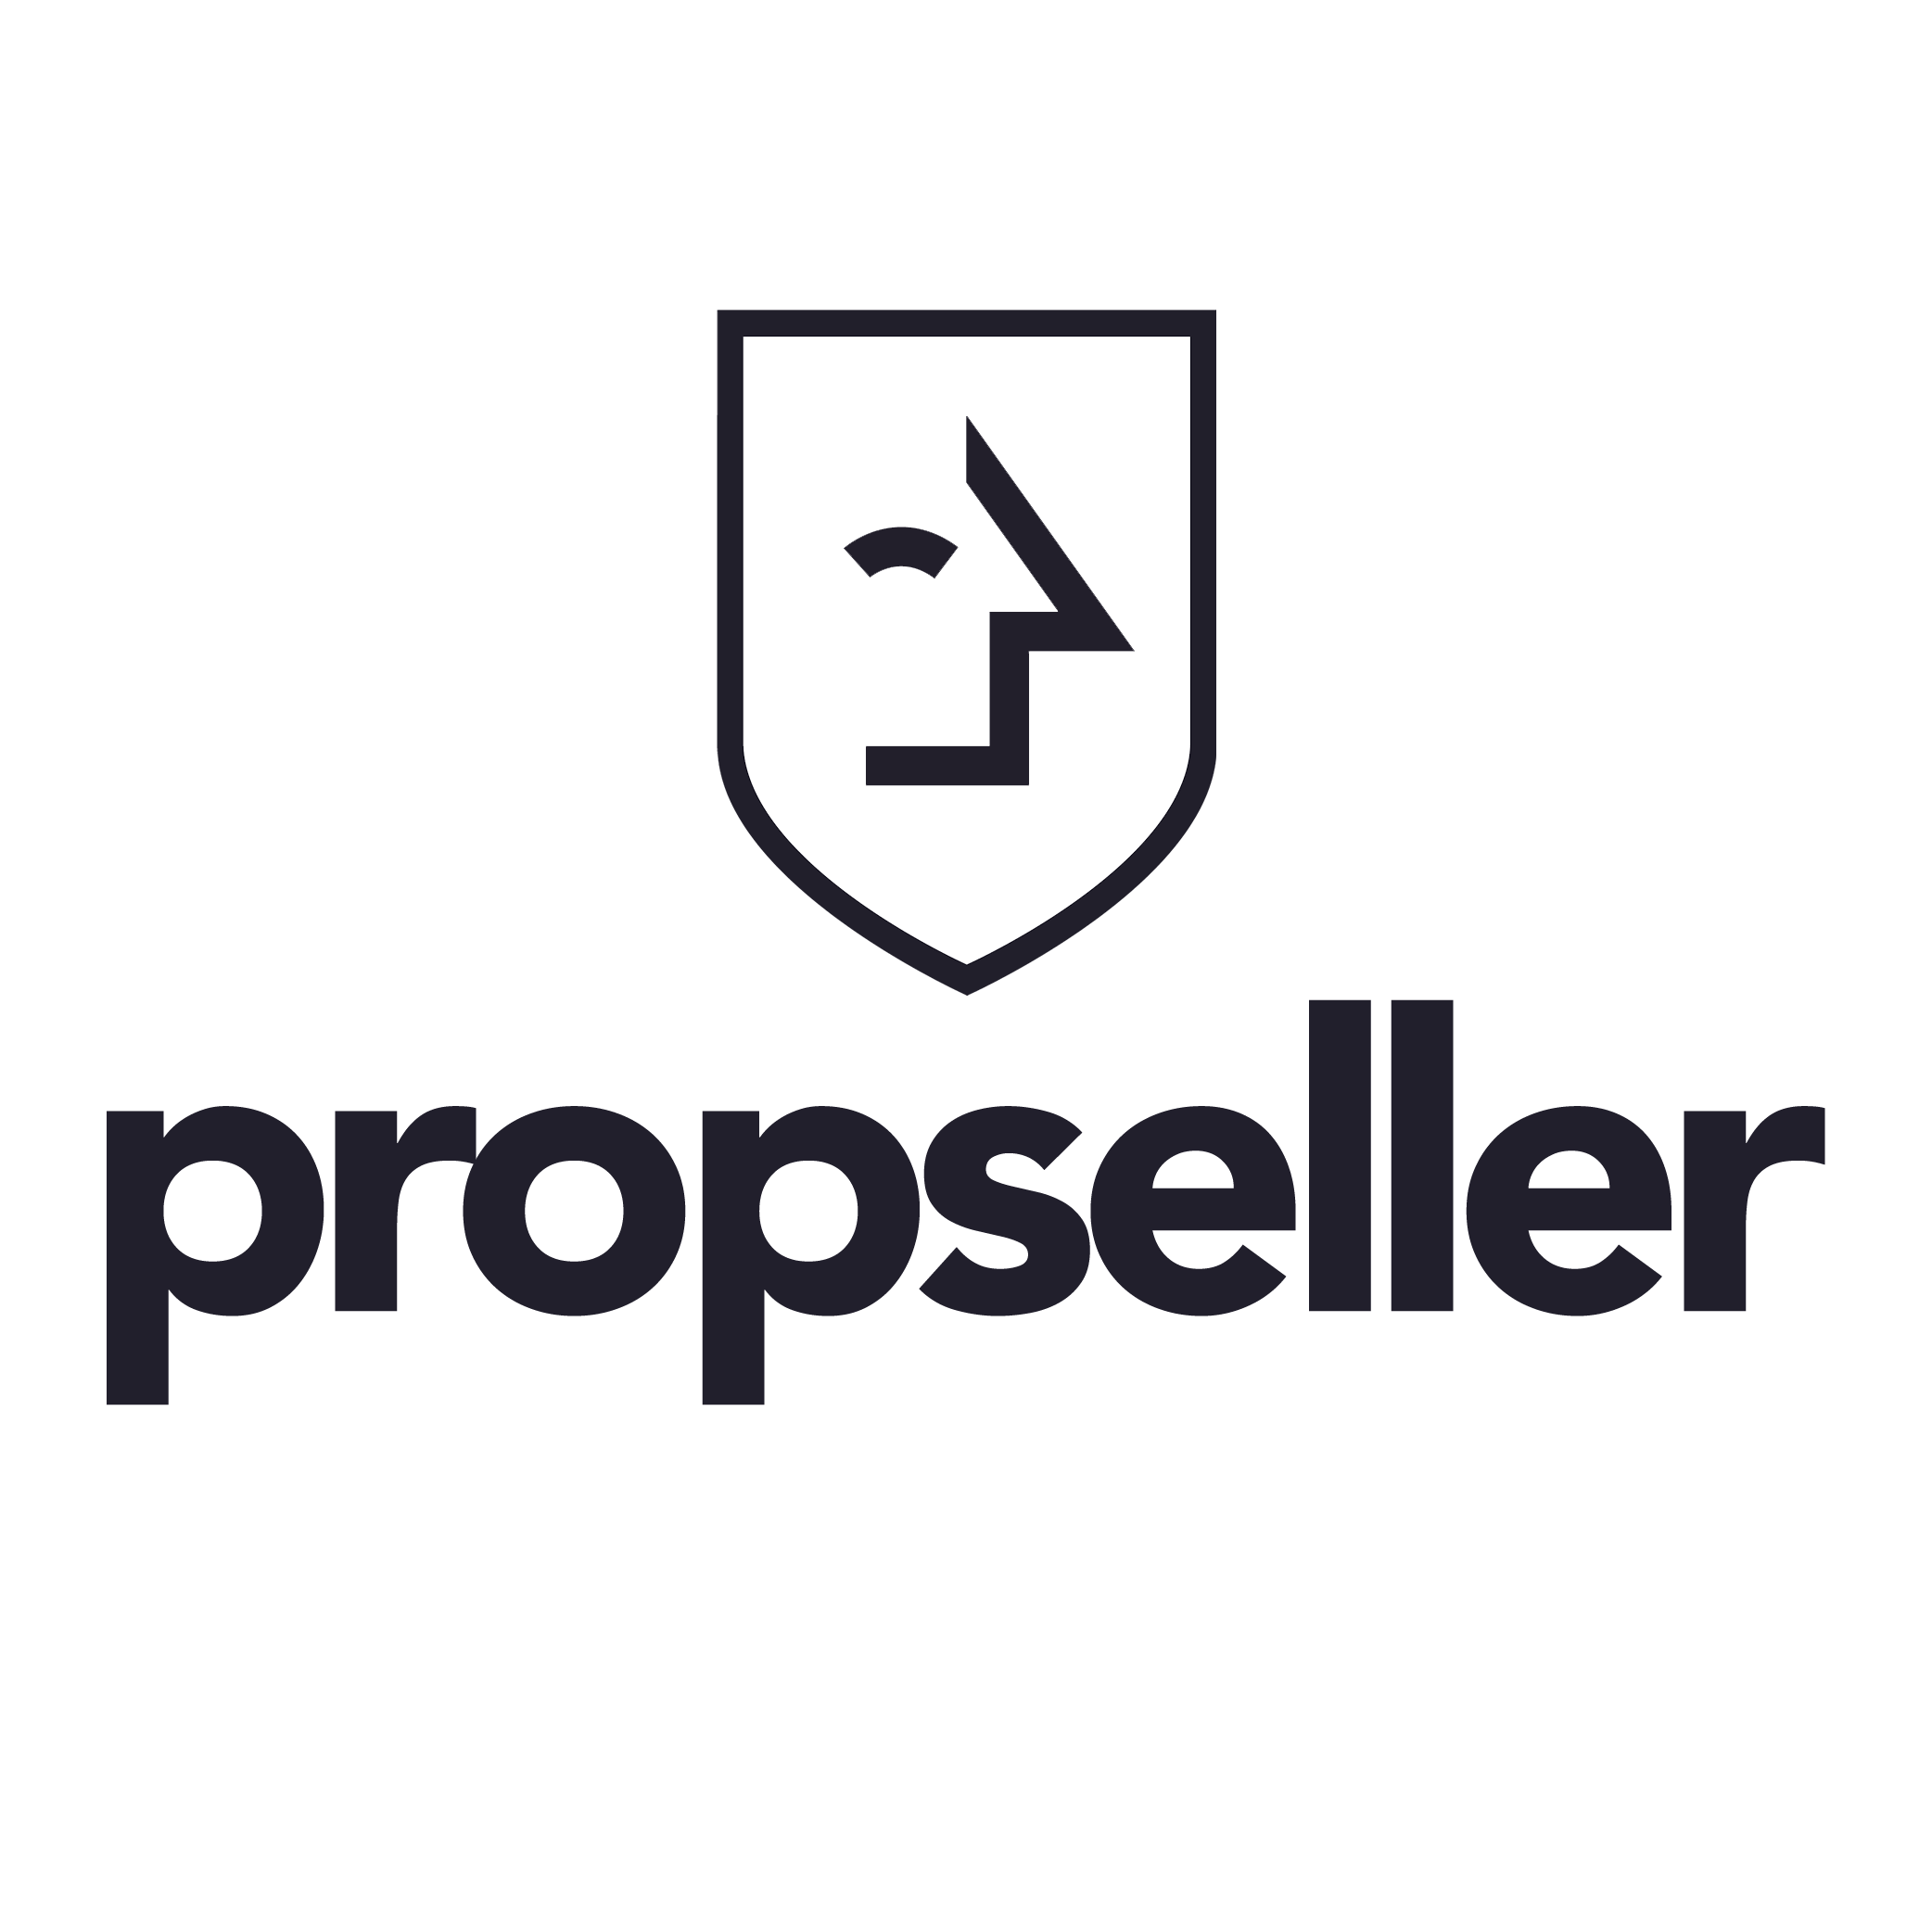 Propseller Pte. Ltd. company logo